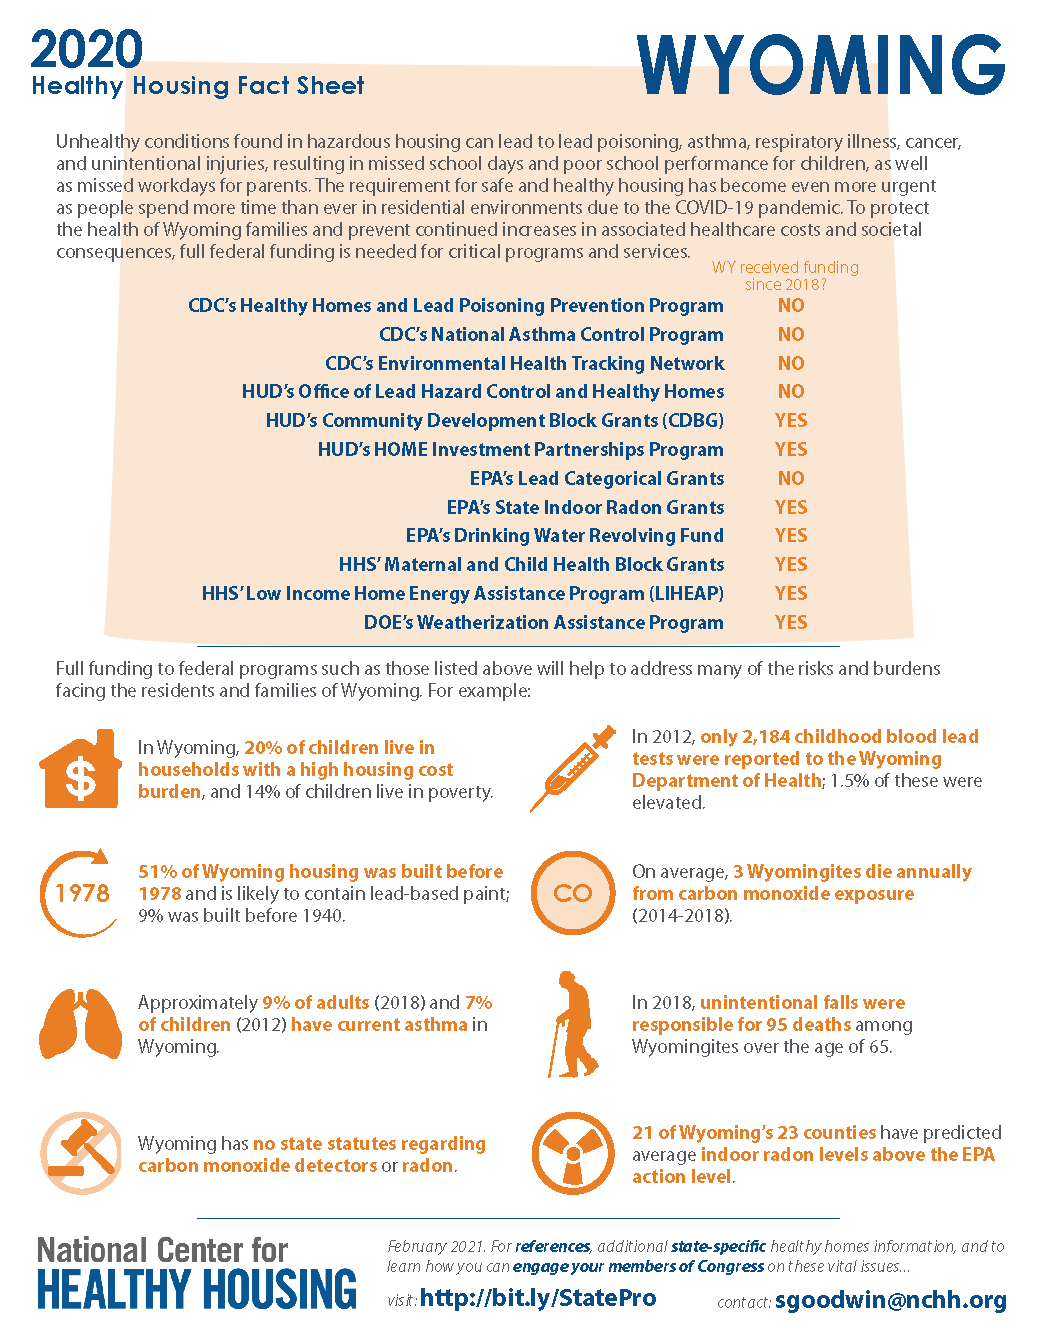 Healthy Housing Fact Sheet - Wyoming 2020